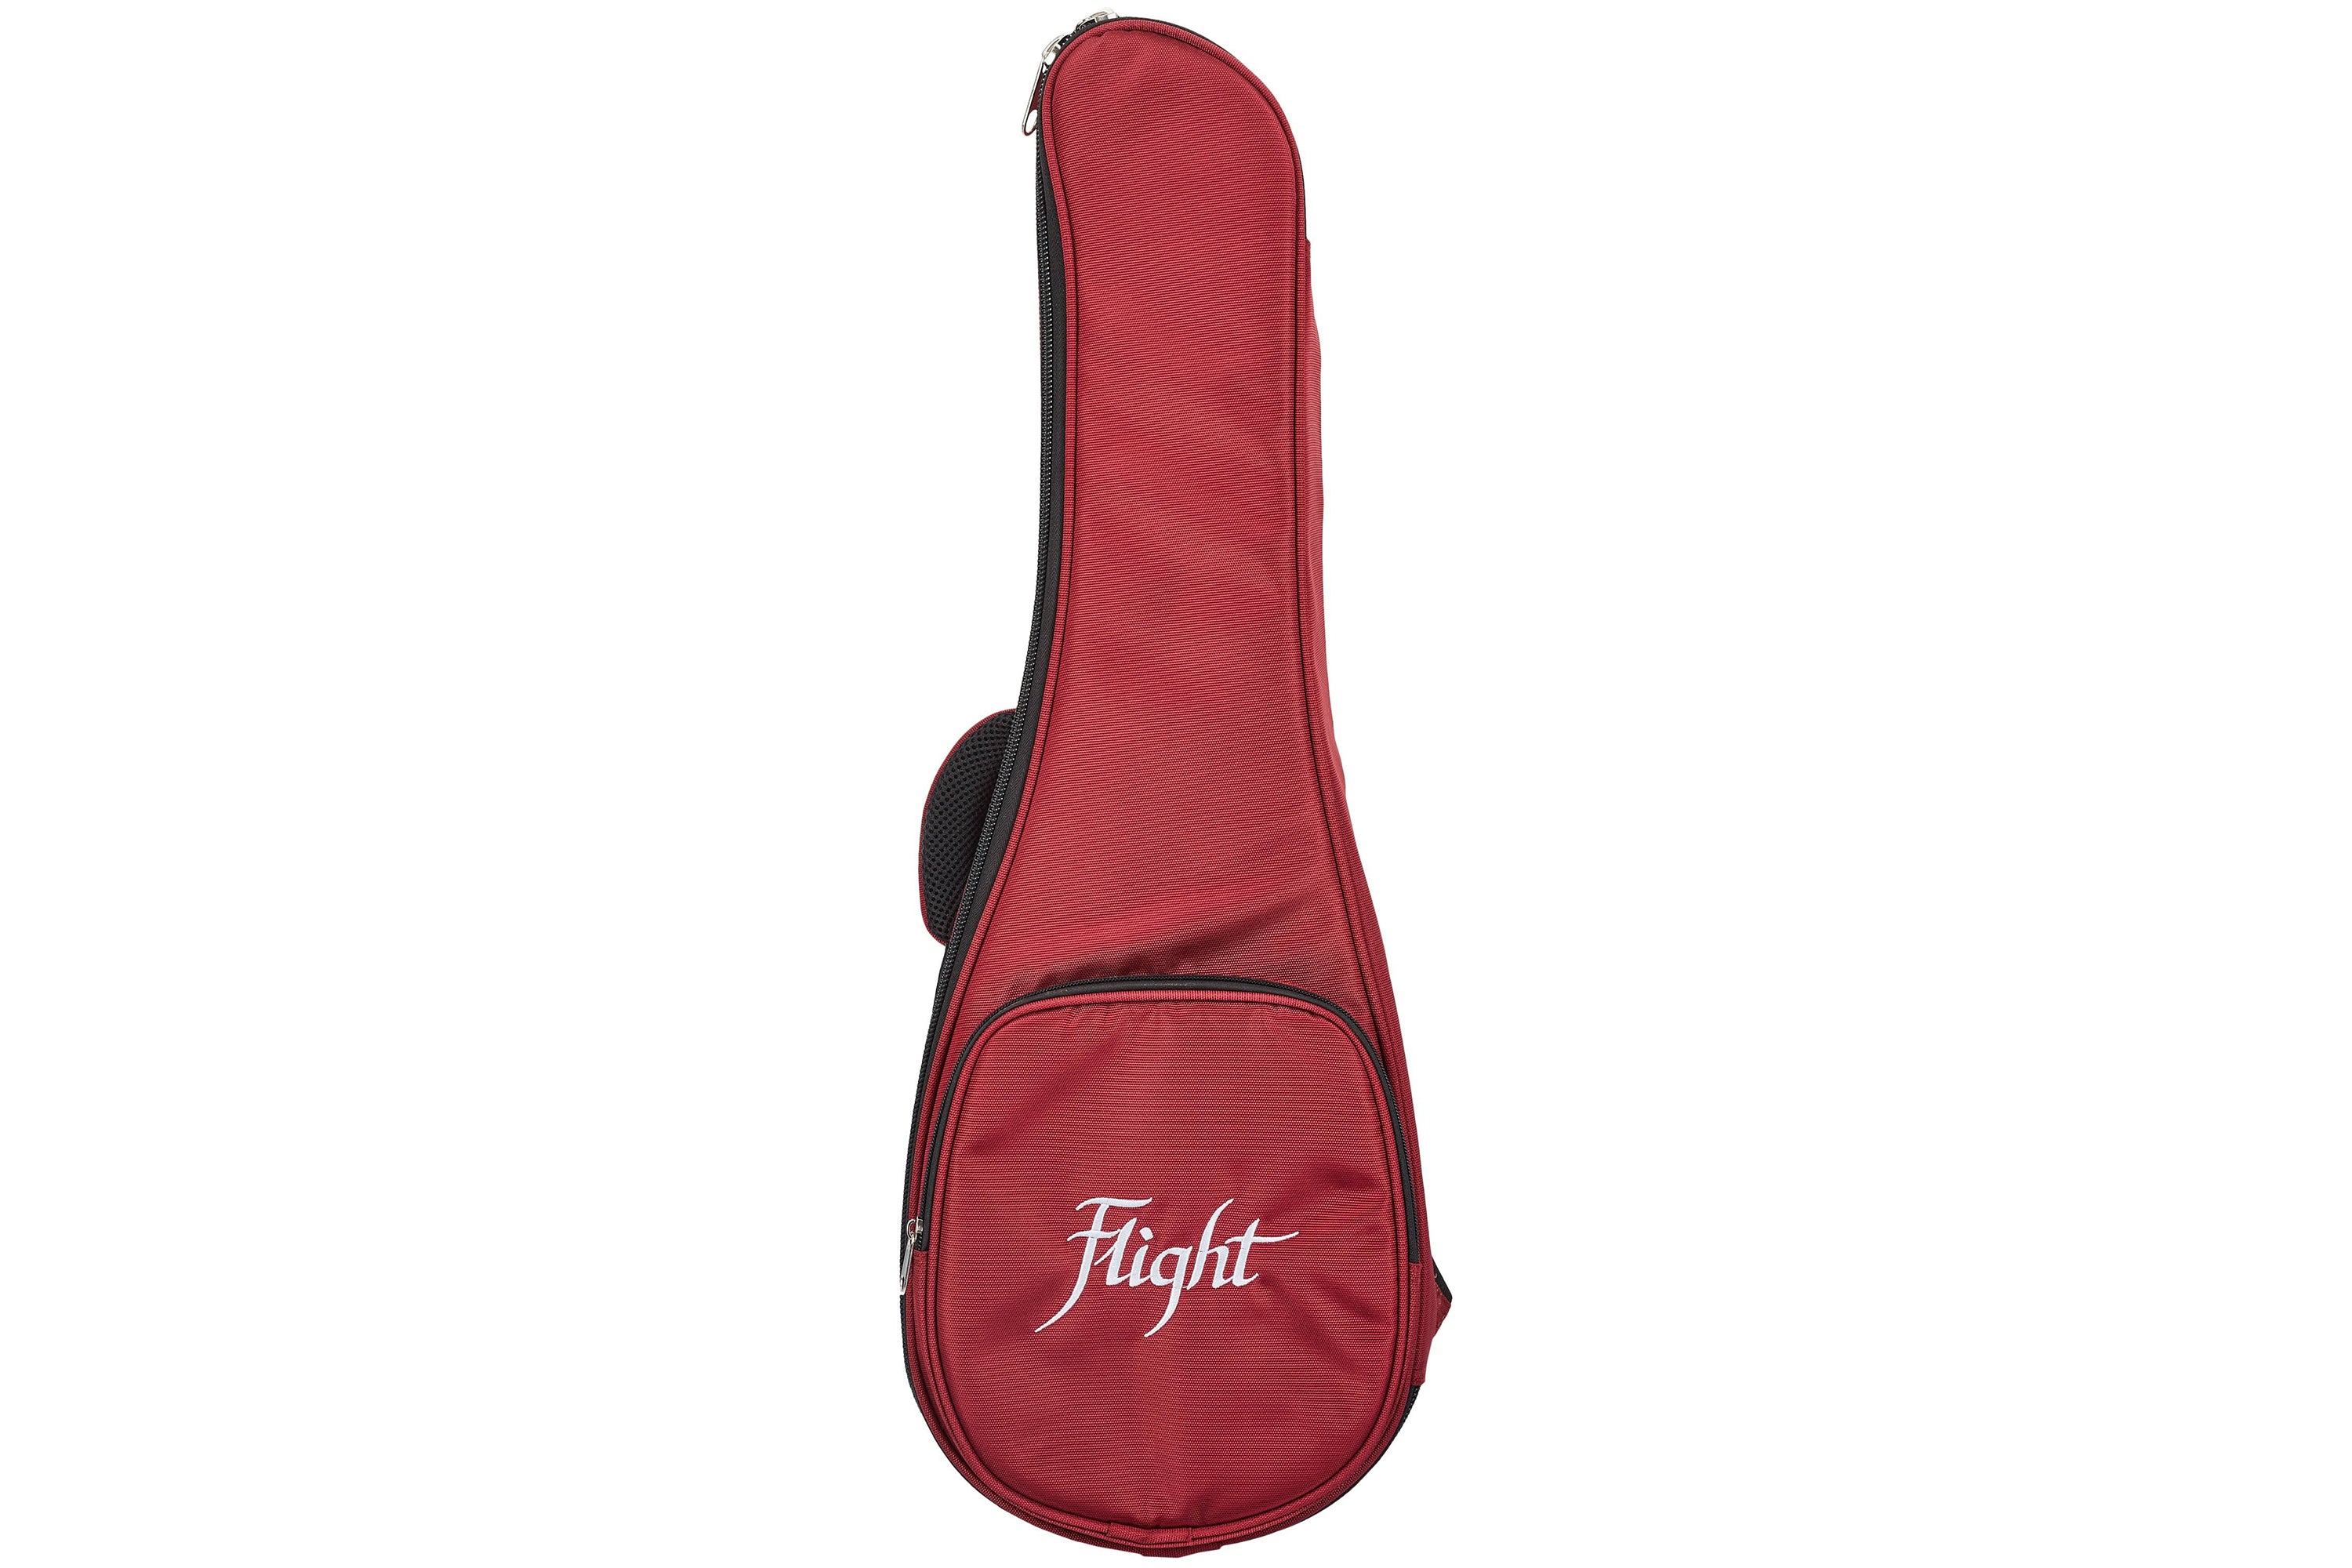 Flight Premium Padded Gigbag - CONCERT - RED